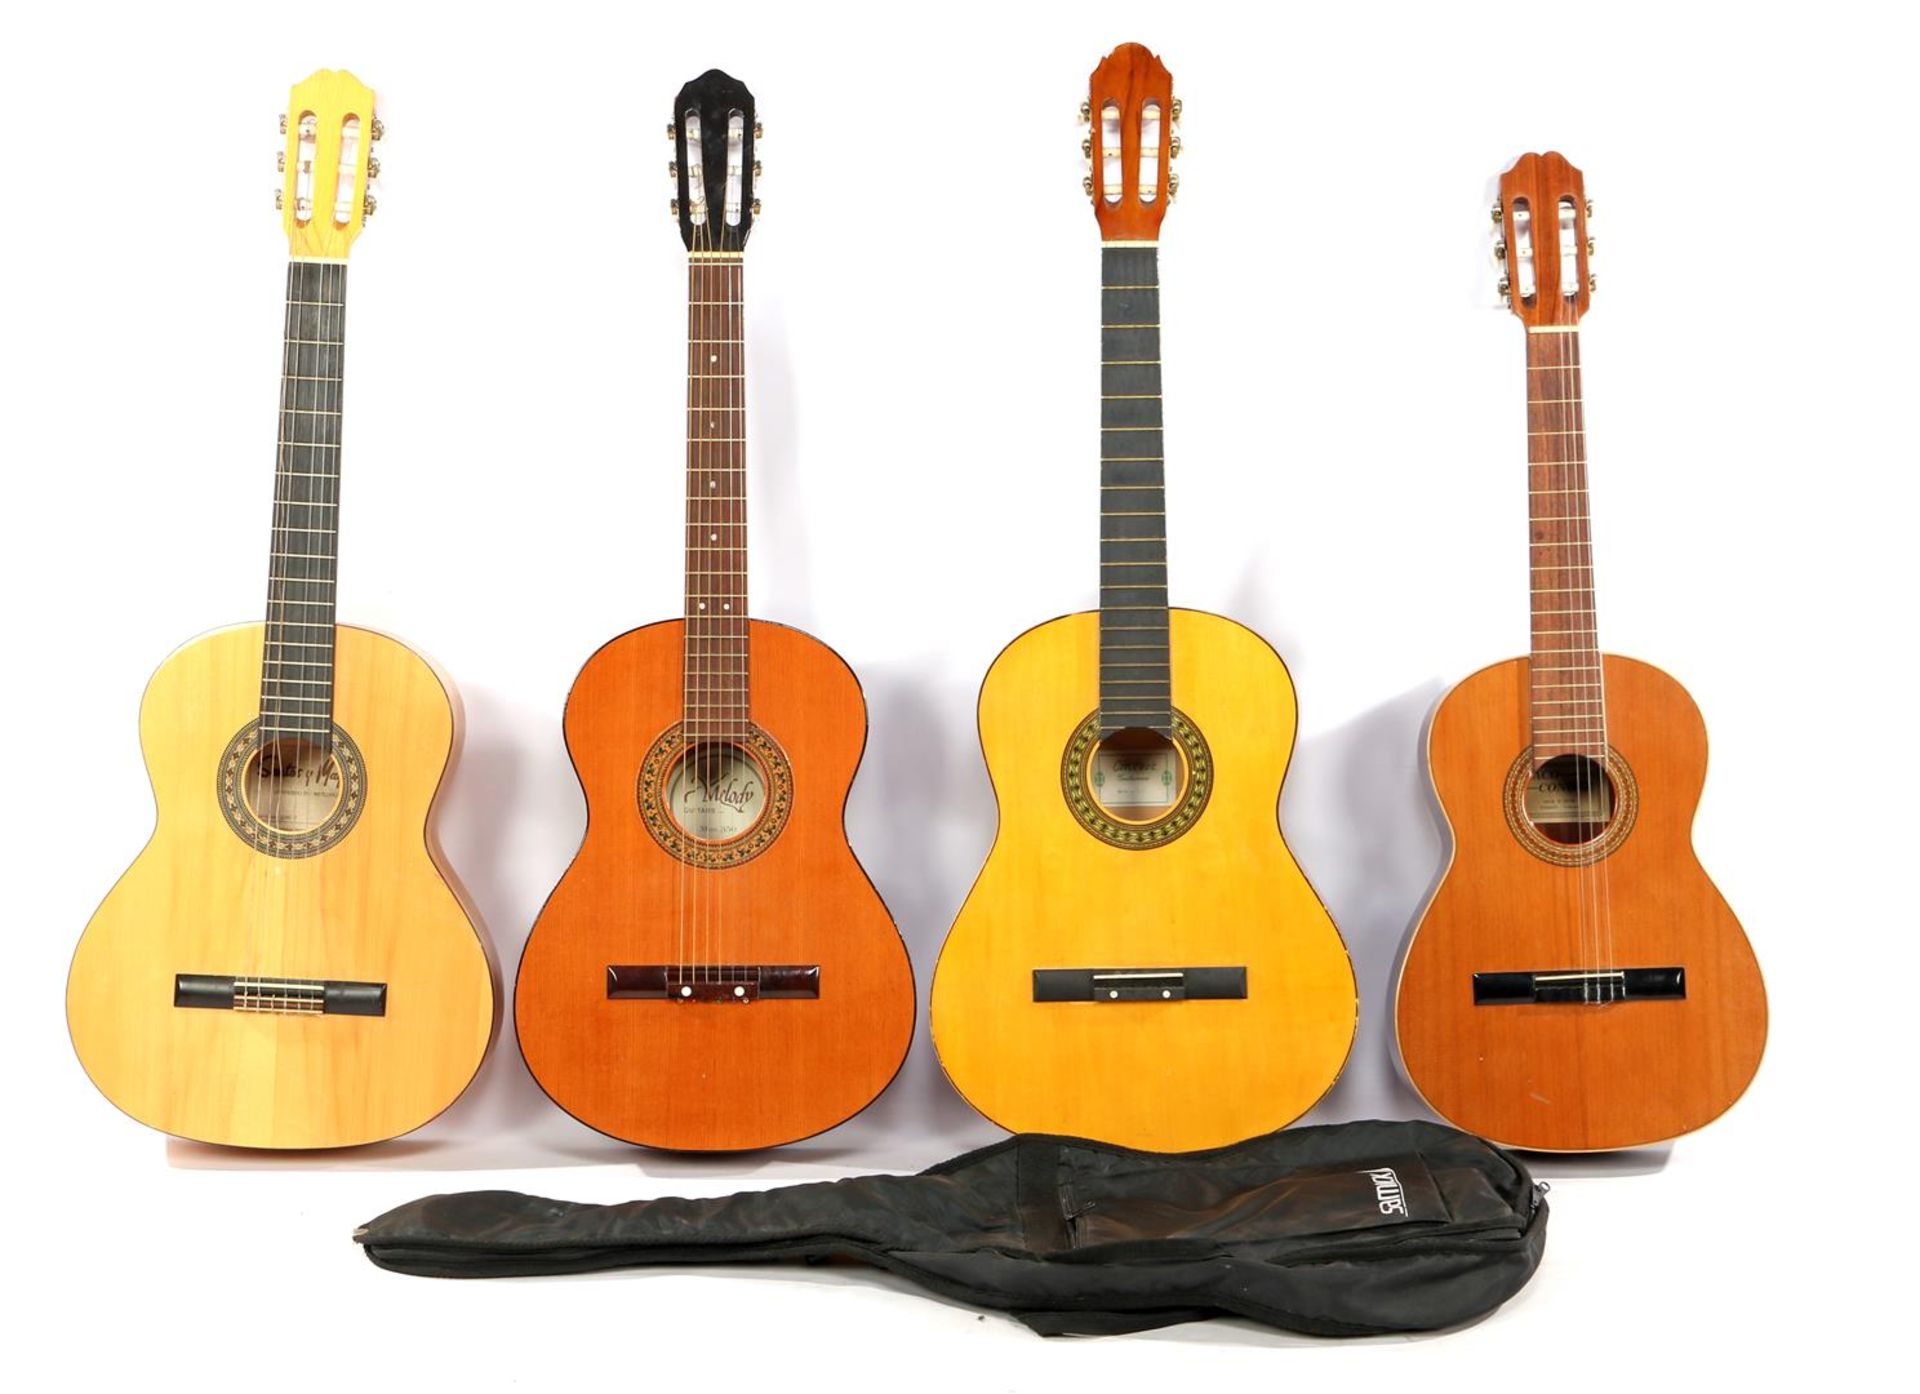 4 acoustic guitars